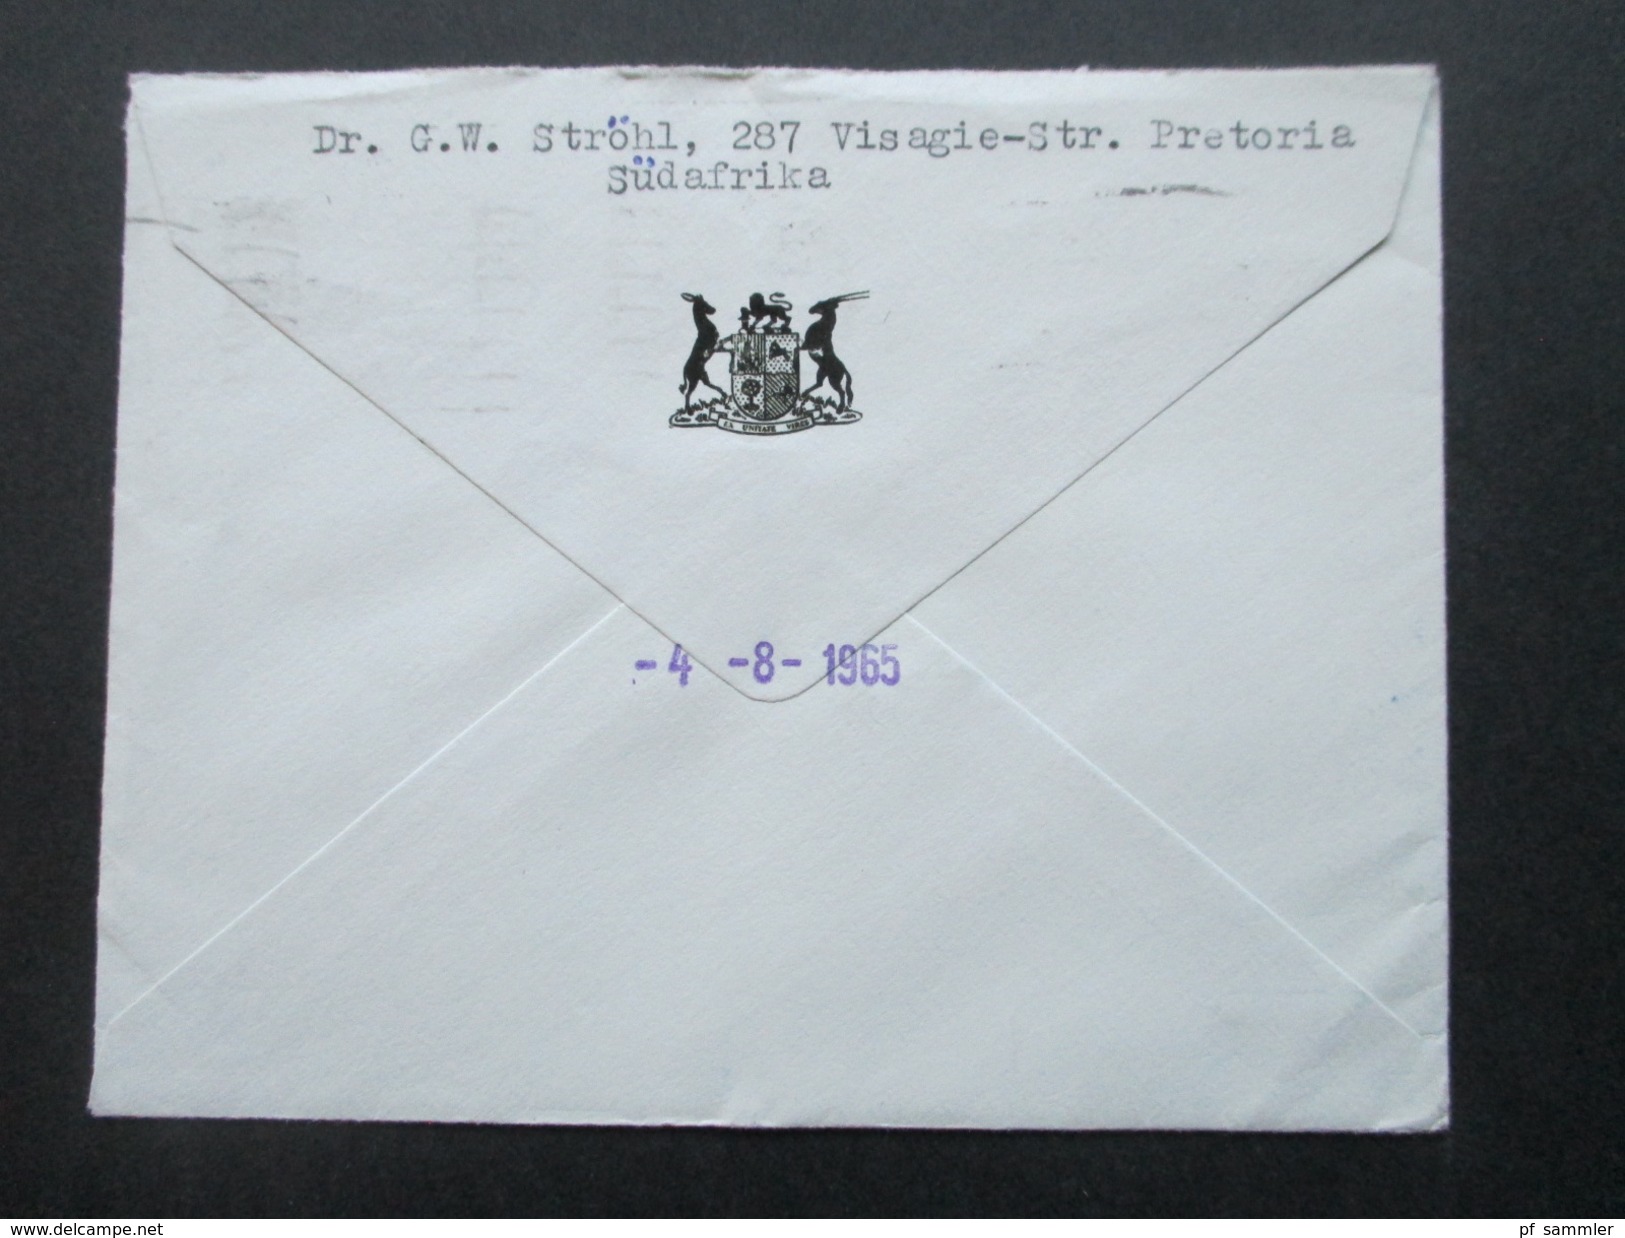 Südafrika 1965 Social Philately Brief An Den Präsidenten Der BRD Heinrich Lübke! Pretoria - Bonn - Covers & Documents